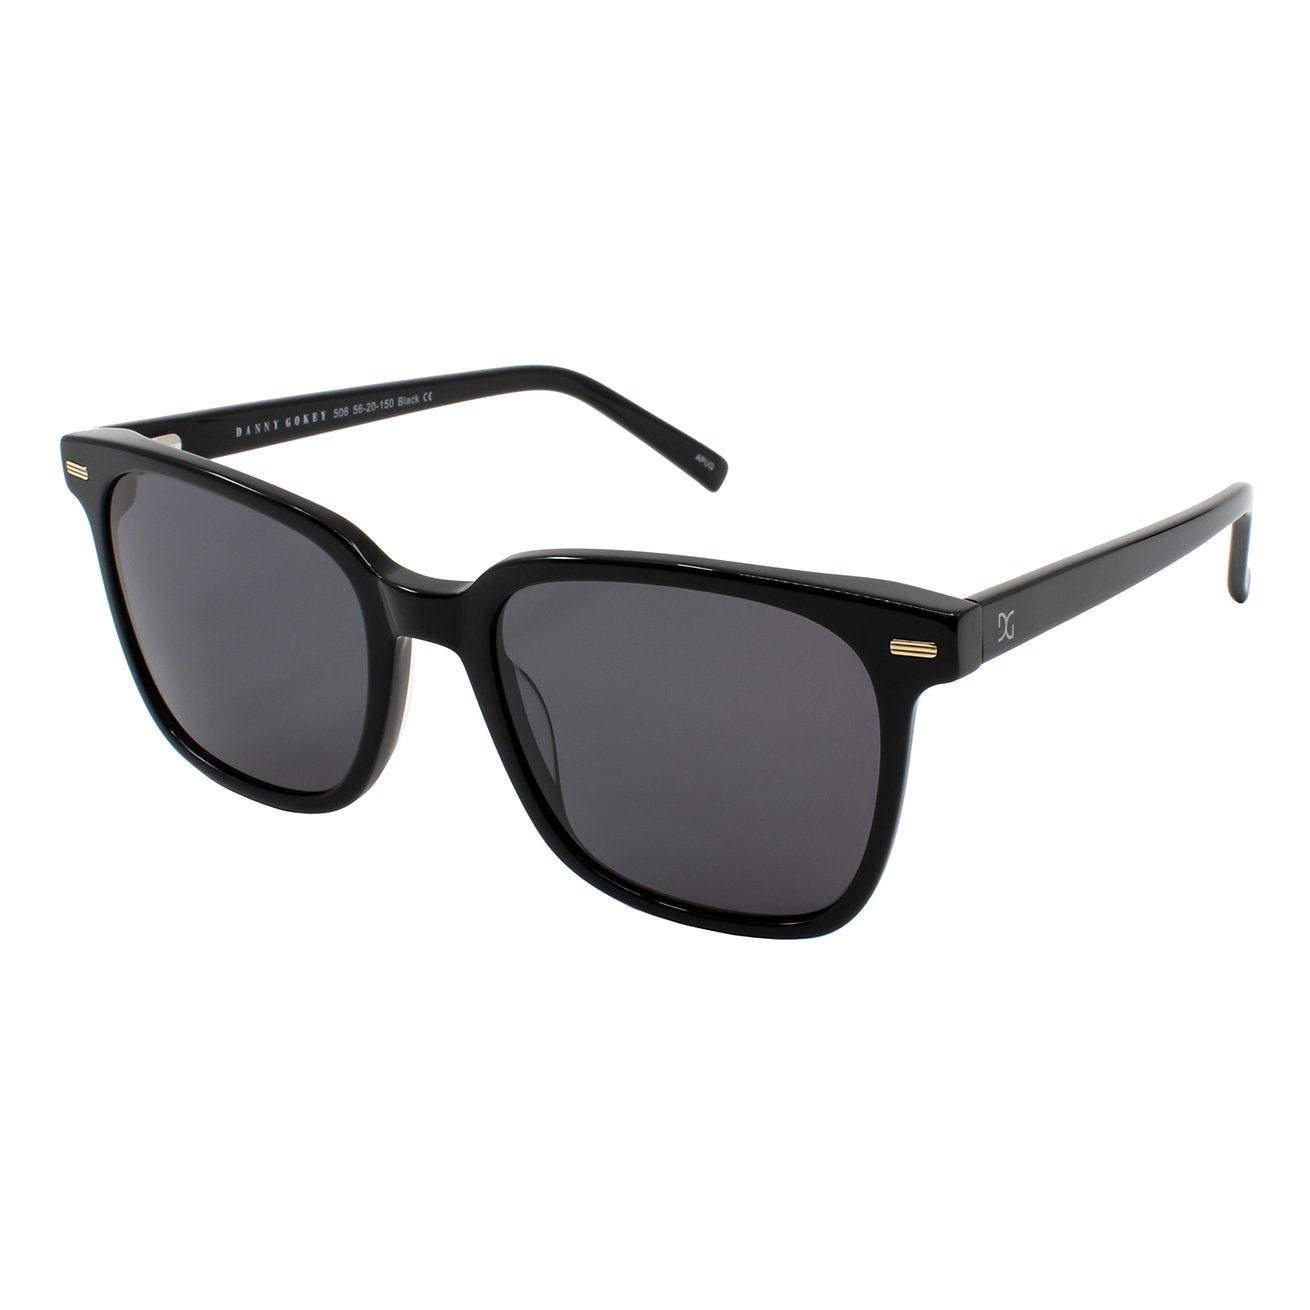 Danny Gokey sunglasses model 506 black